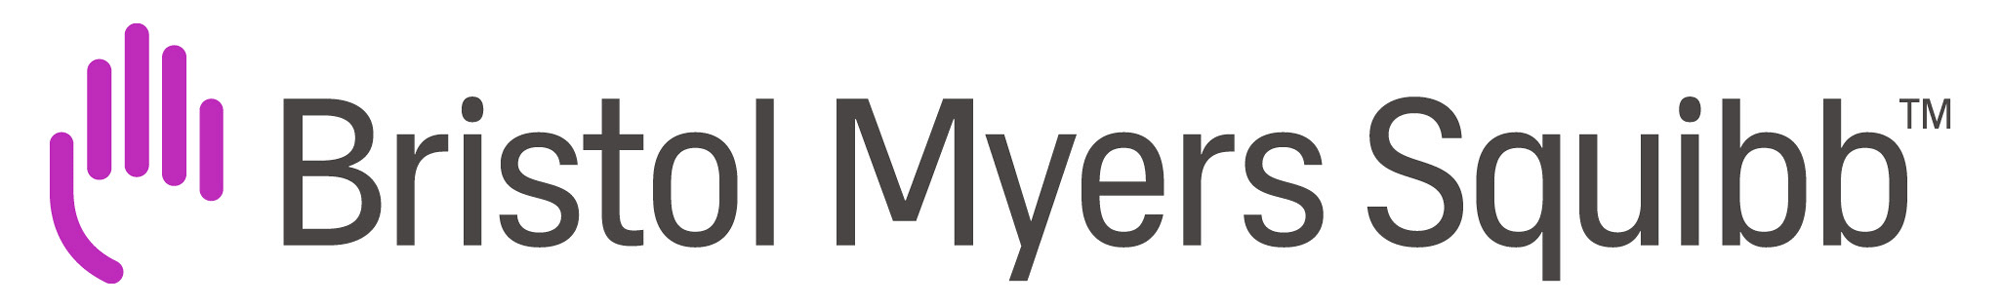 Bristol-Myer Squibb Brand Logo